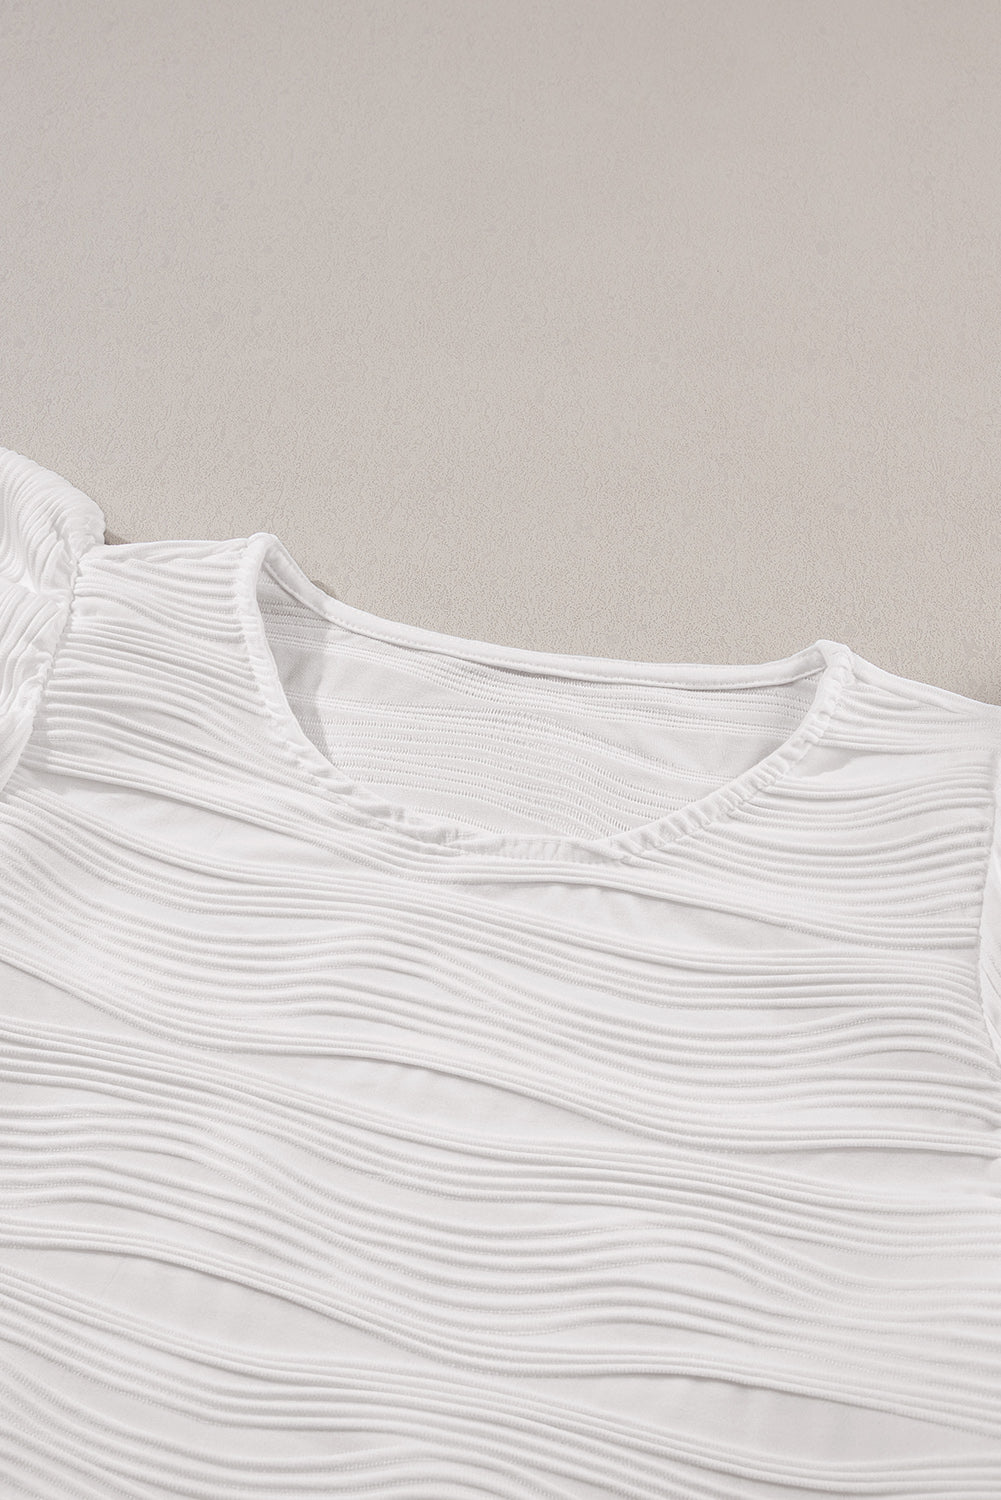 White Wavy Textured Ruffle Sleeve Top-11